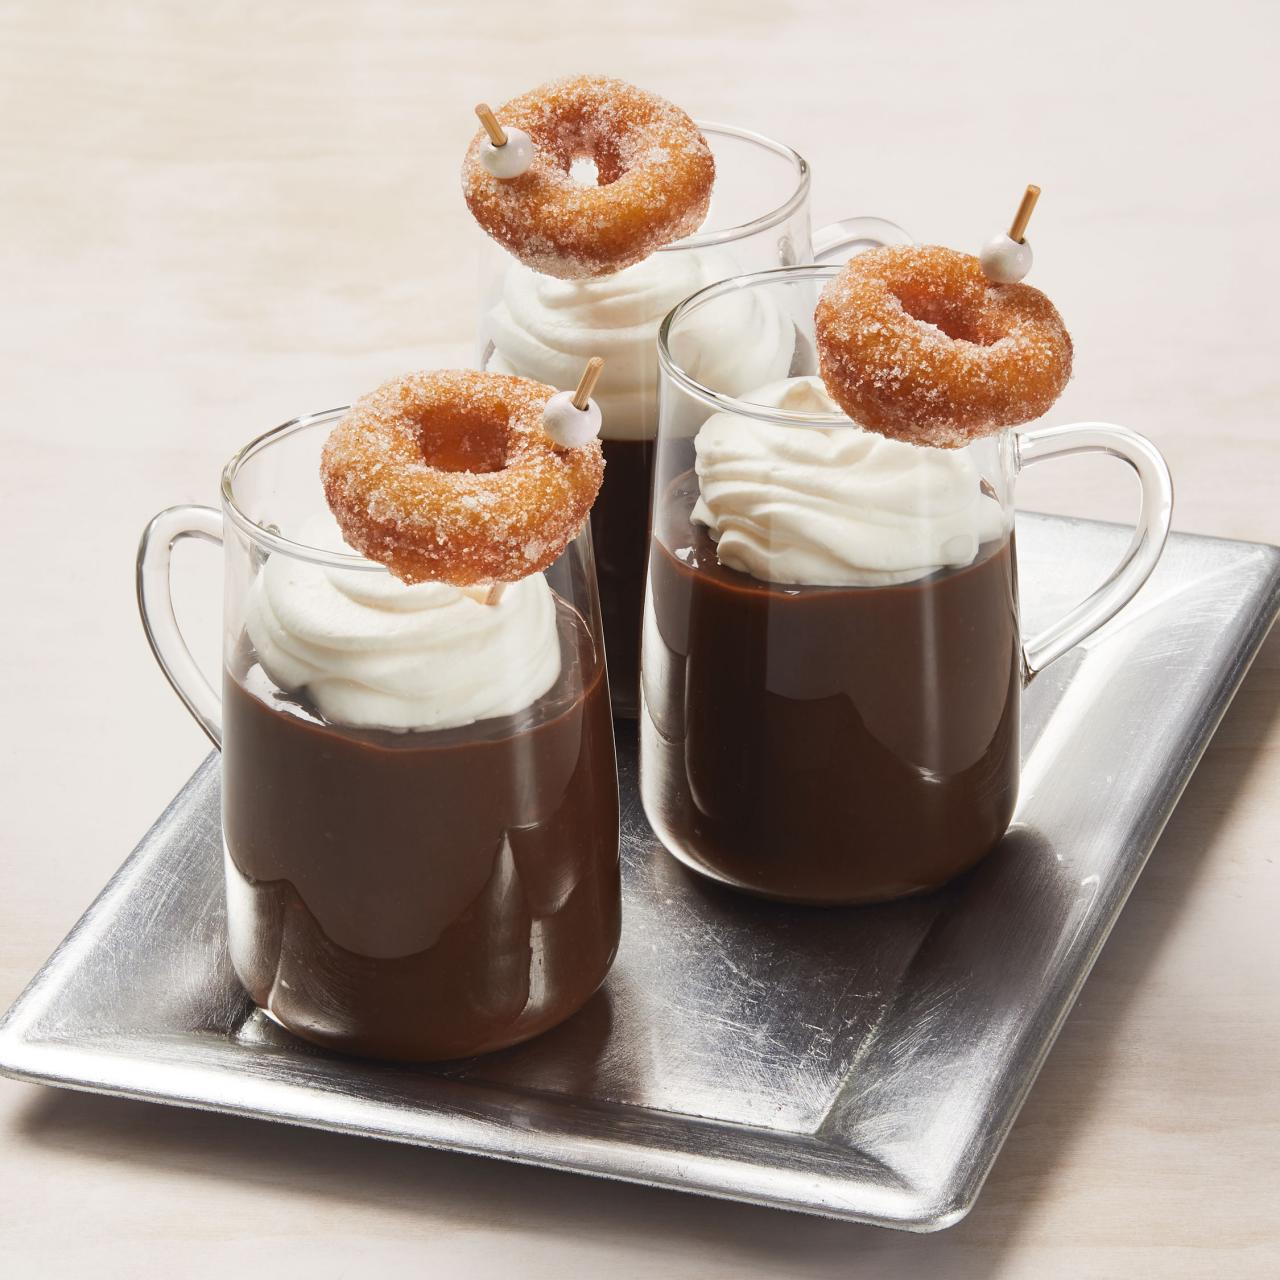 https://food.fnr.sndimg.com/content/dam/images/food/fullset/2018/9/27/1/FNM_100118-Coffee-Pudding-with-Mini-Doughnuts_s4x3.jpg.rend.hgtvcom.1280.1280.suffix/1538085755150.jpeg